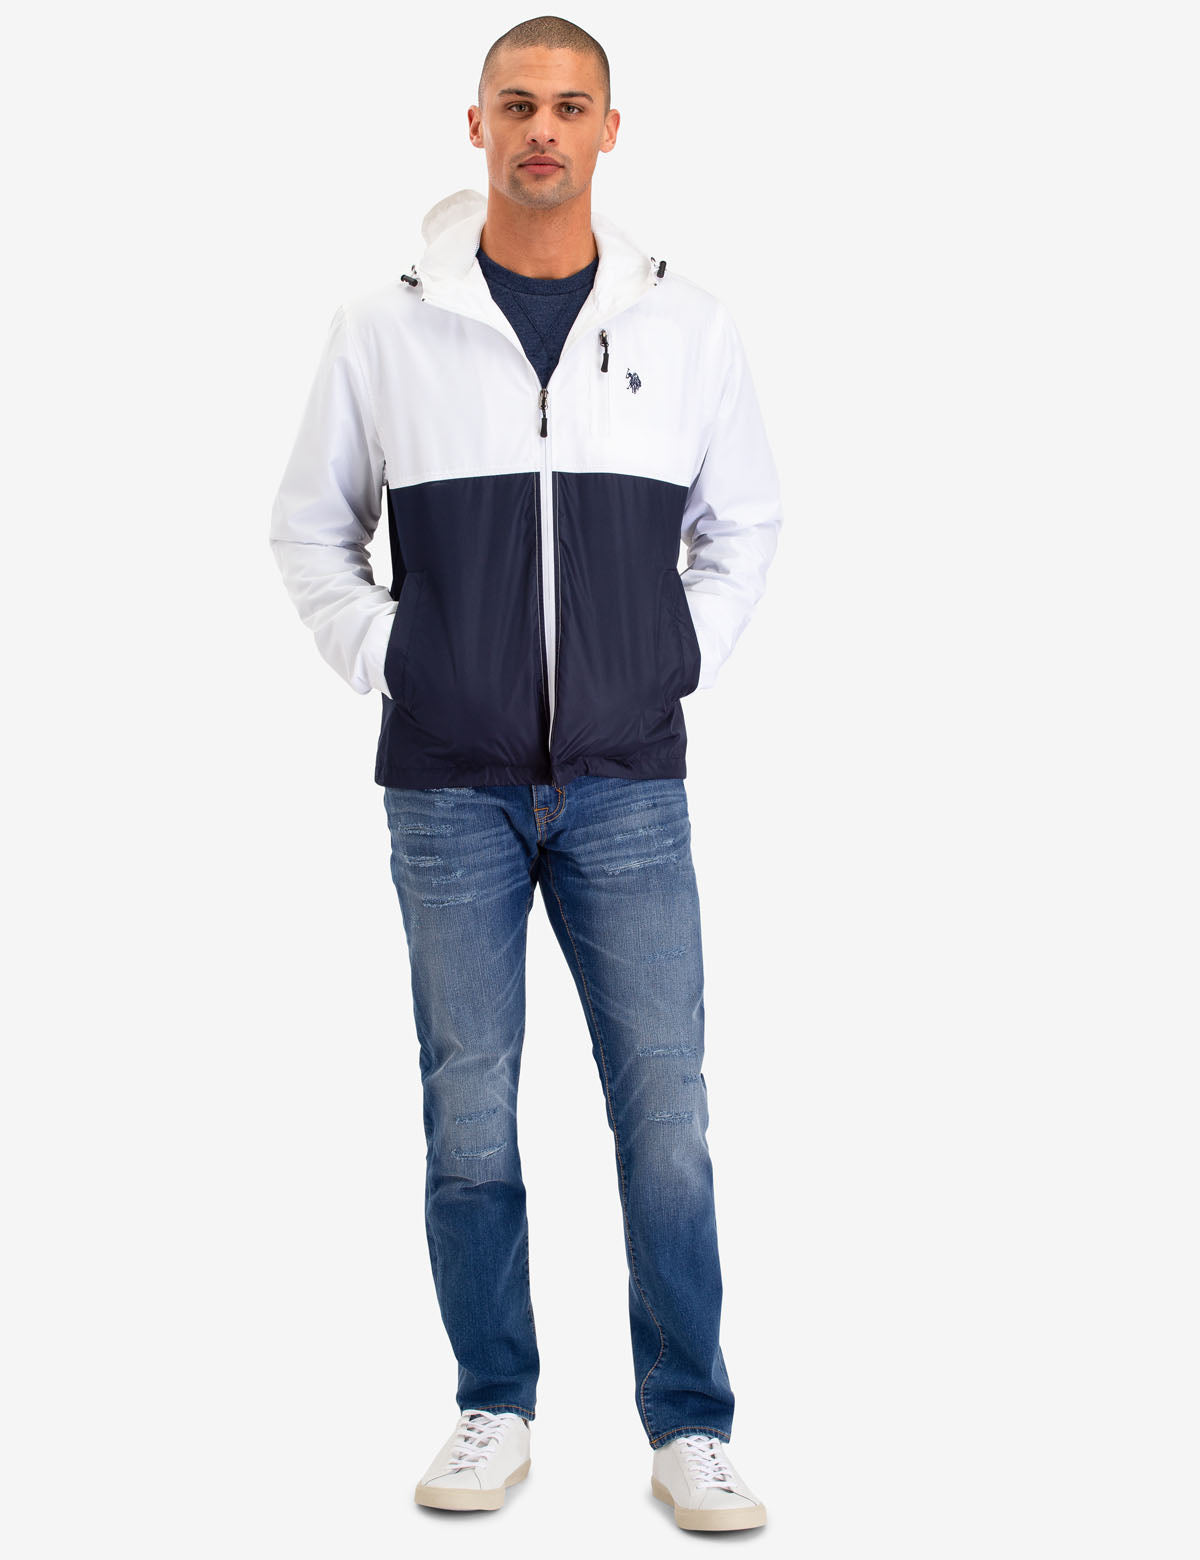 polo windbreaker jacket mens